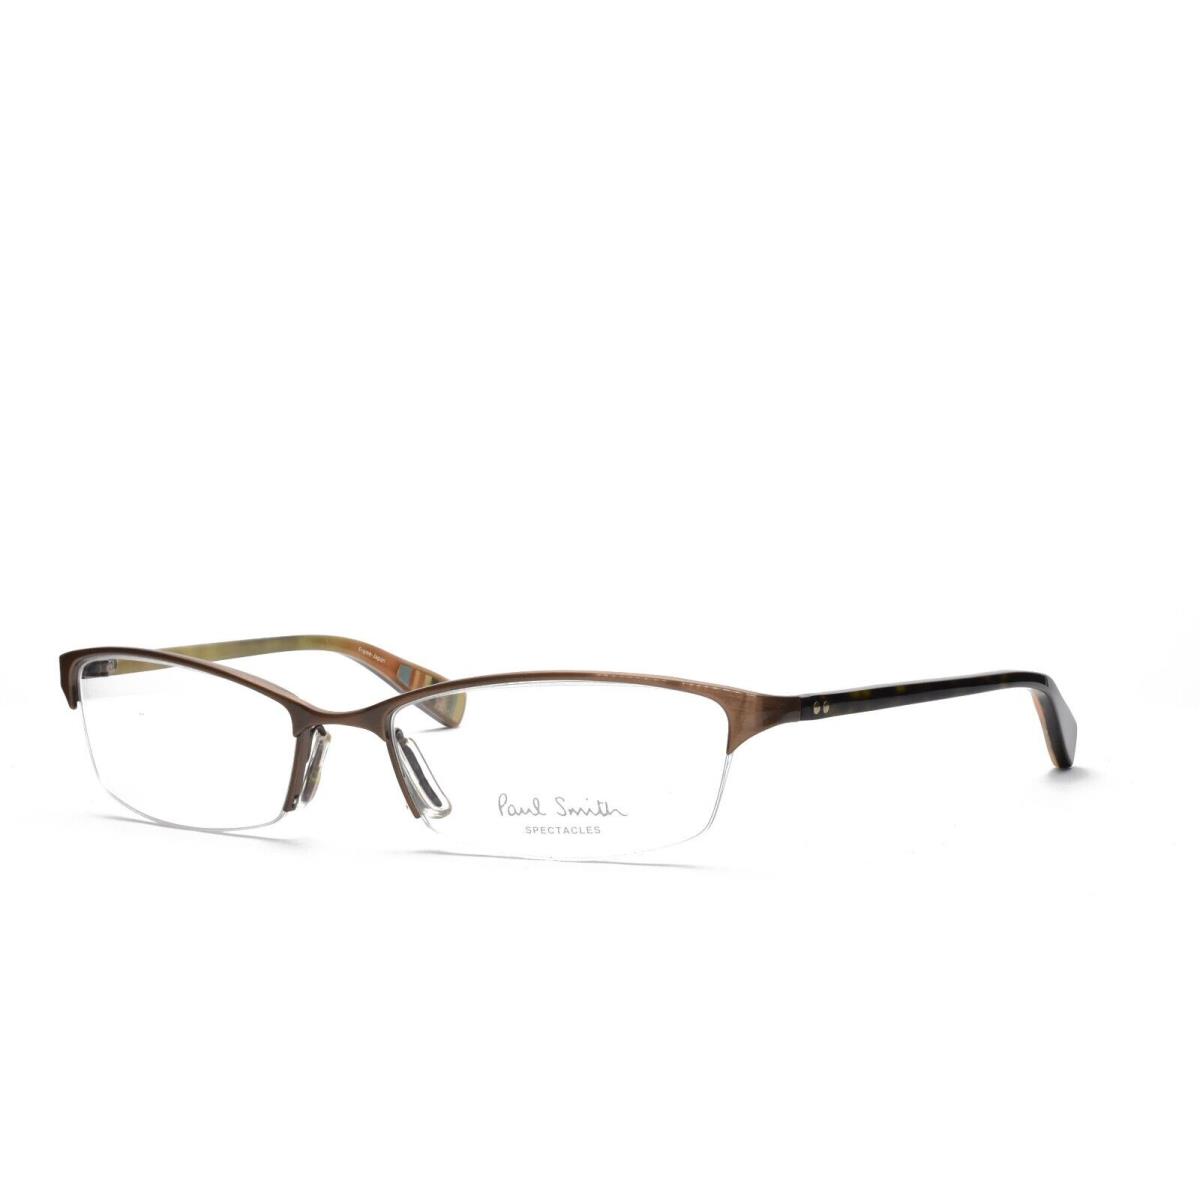 Paul Smith 186 MC 53-17-130 Bronze Brown Vtg Vintage Eyeglasses Frames